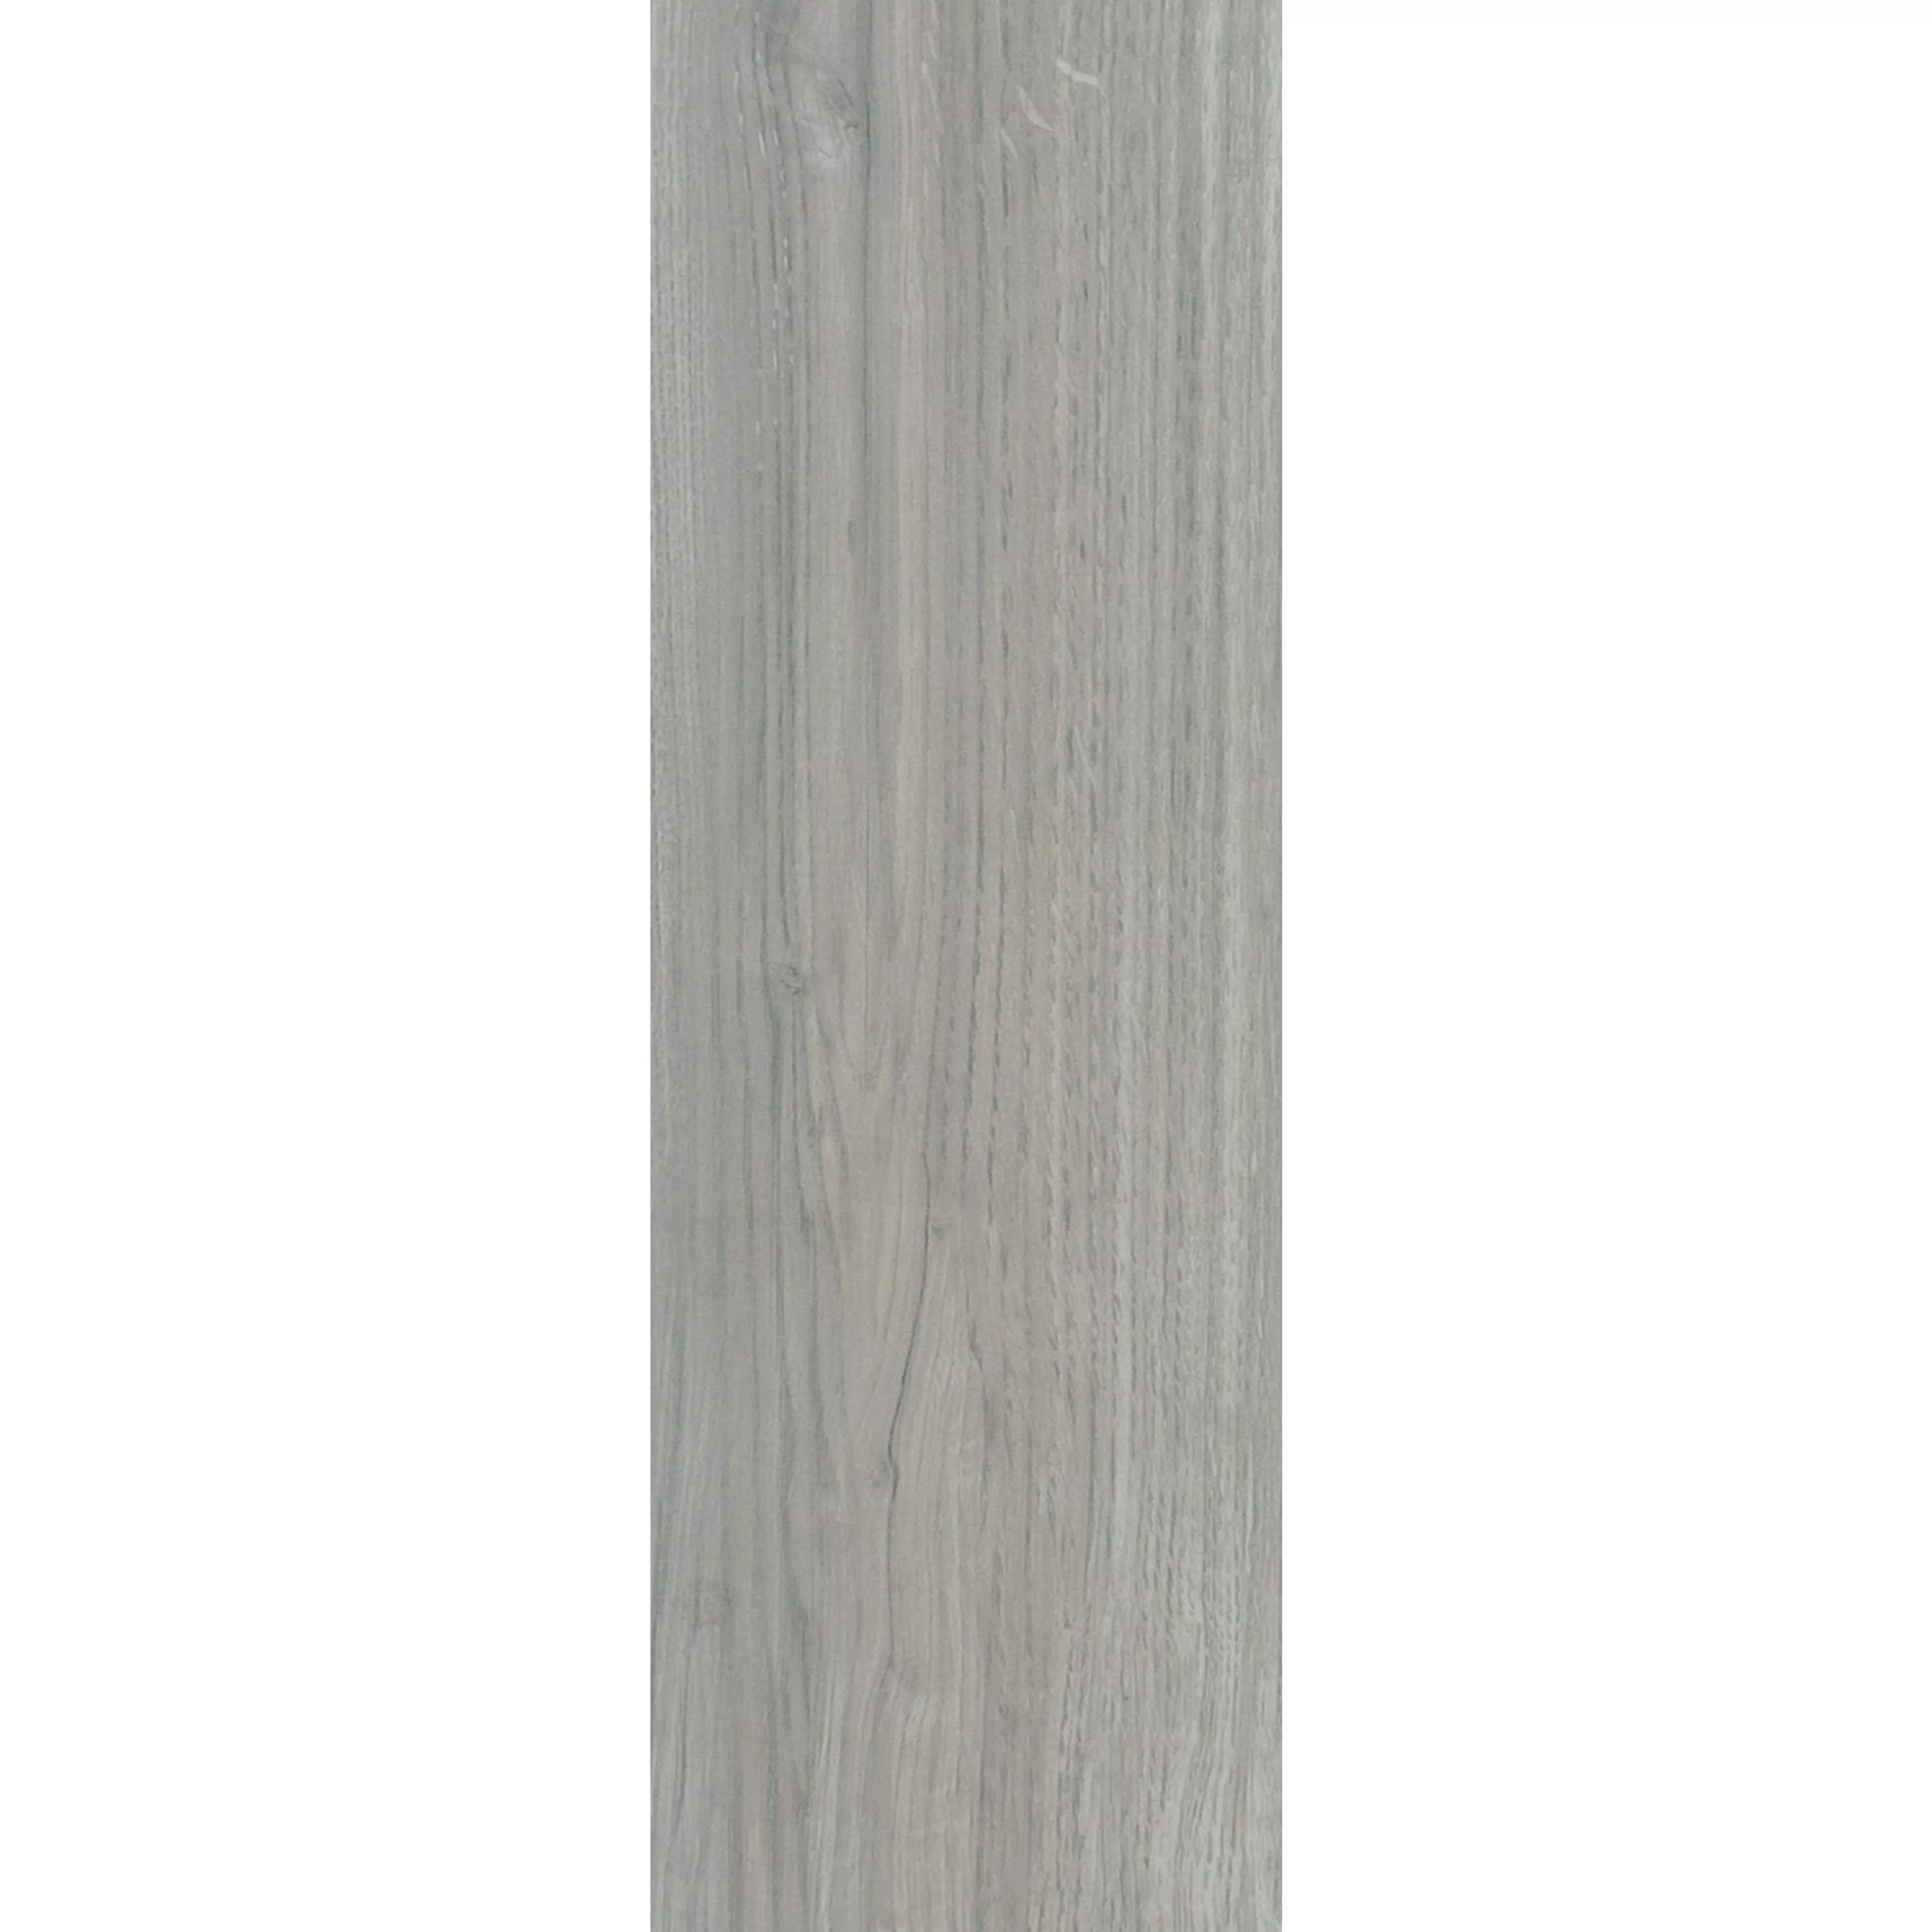 Sample Vloertegels Houtlook Fullwood Beige 20x120cm 